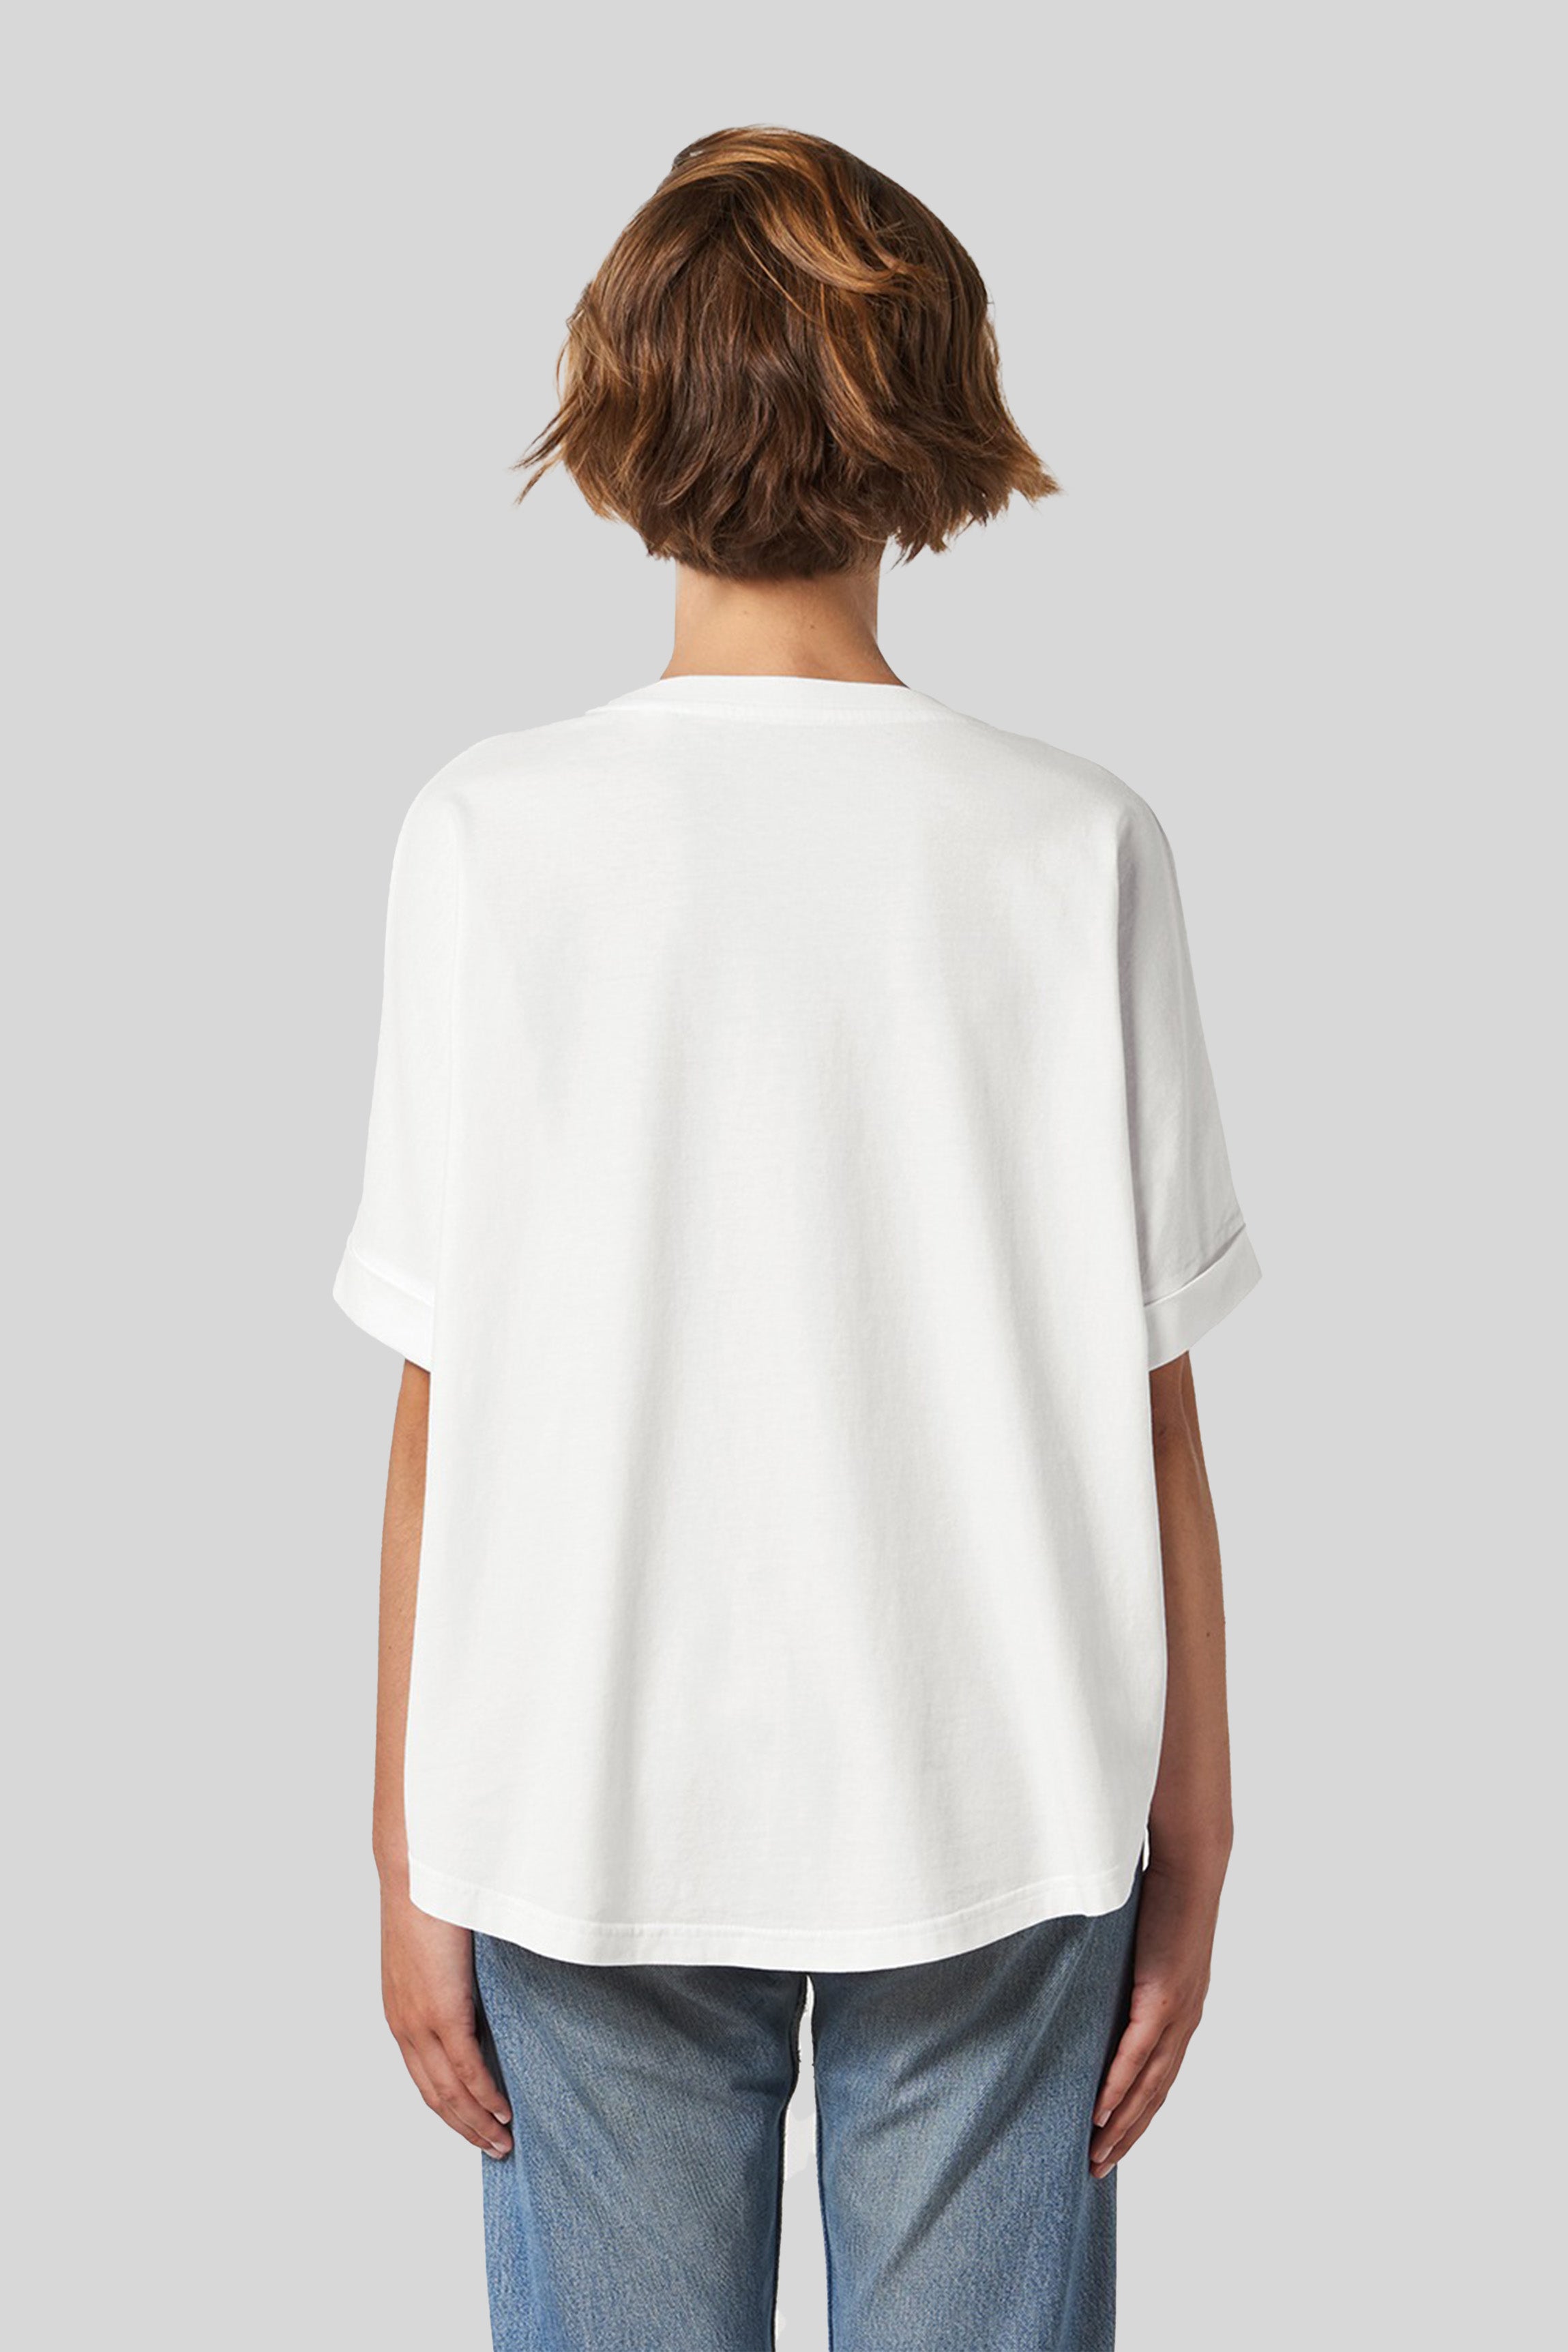 EDEN ASHRAM Perfectly Imperfect Premium Oversized Rolled Sleeve T-Shirt